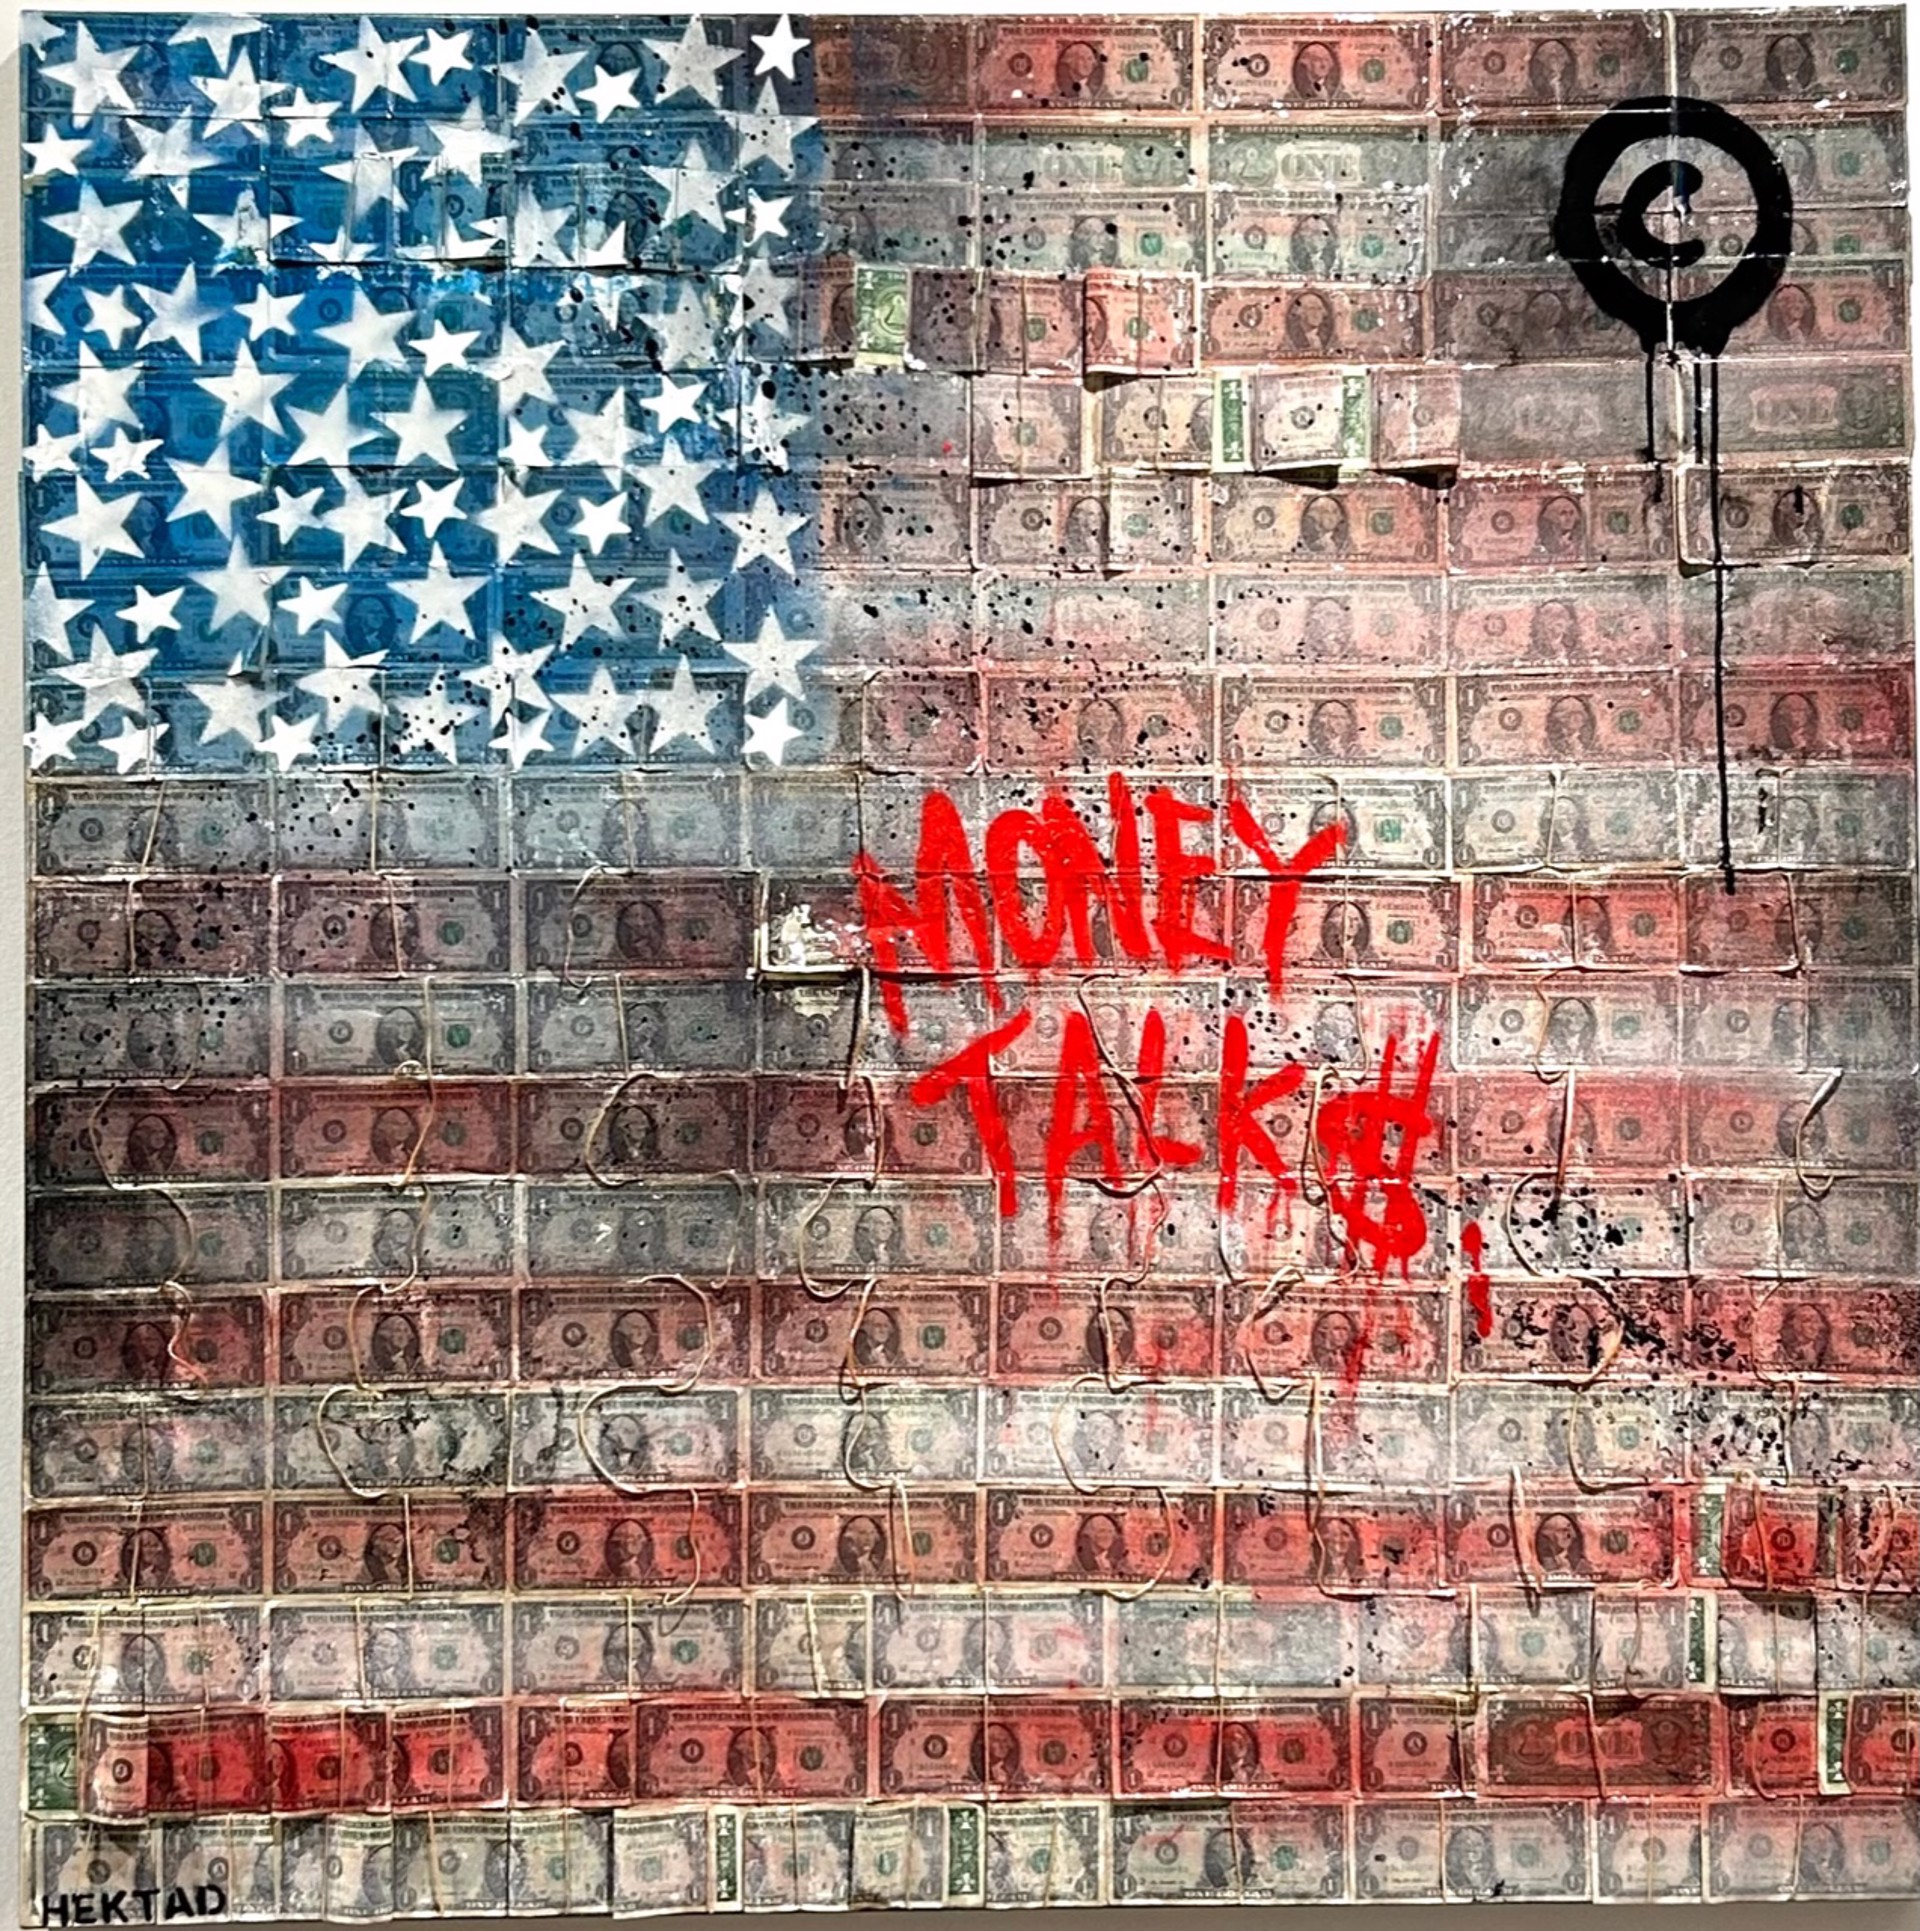 Money Talks and Bullshit Walks by HEKTAD